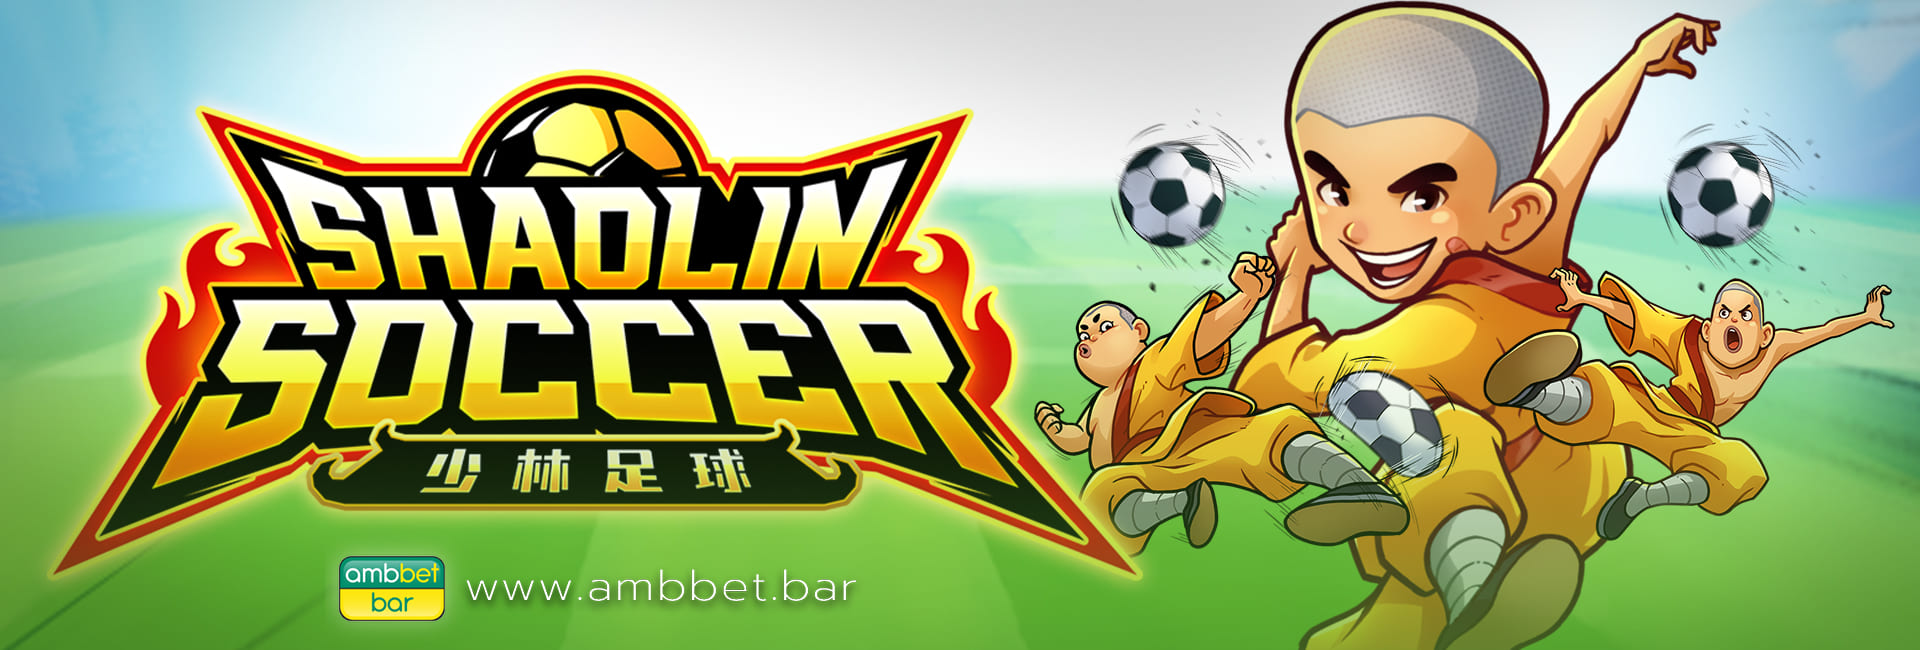 Shaolin Soccer banner